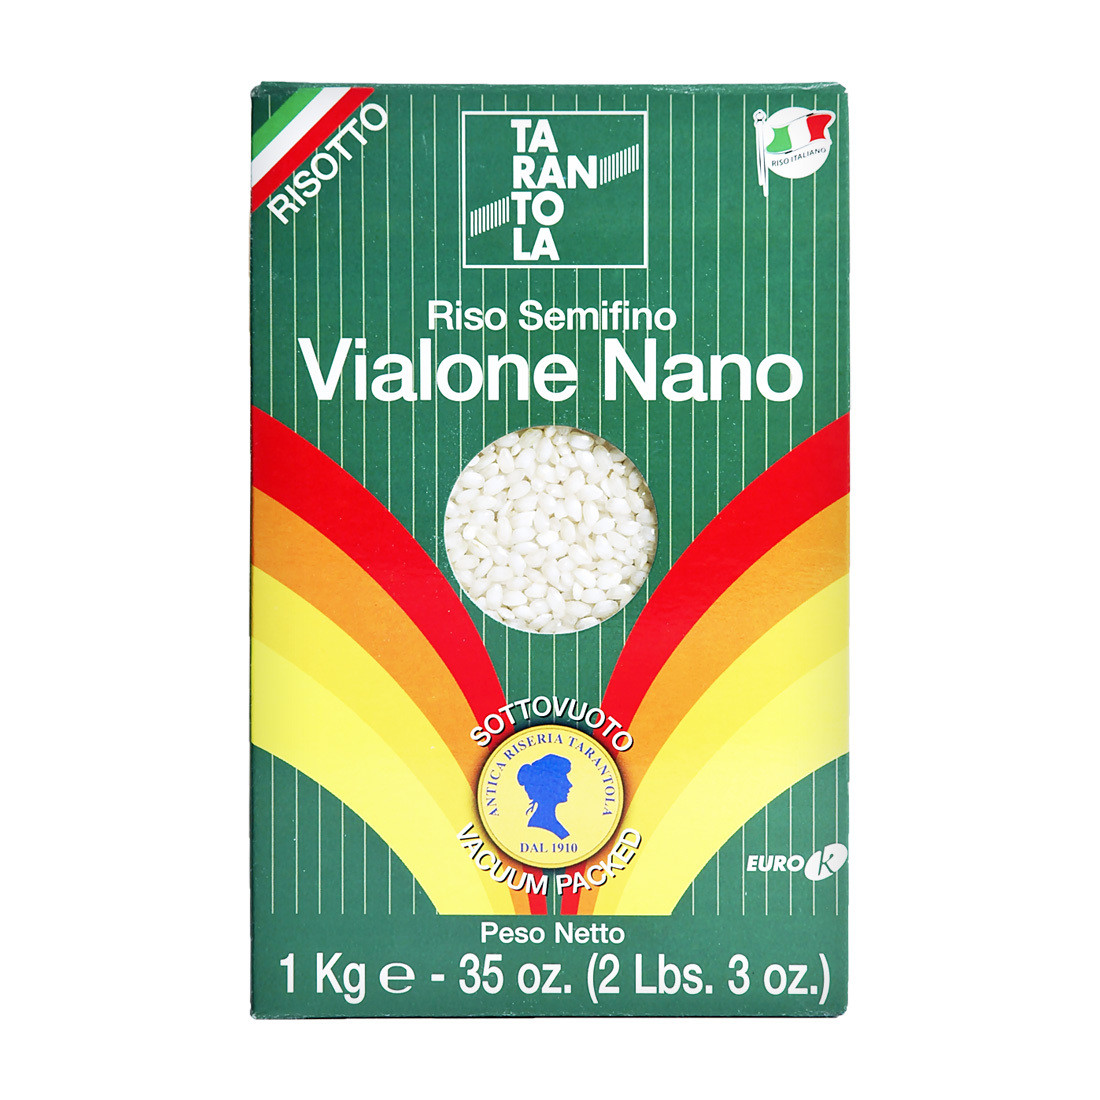 Рис виалоне нано (riso semifino vialone nano), ТАРАНТОЛА, вак. пакет 1кг